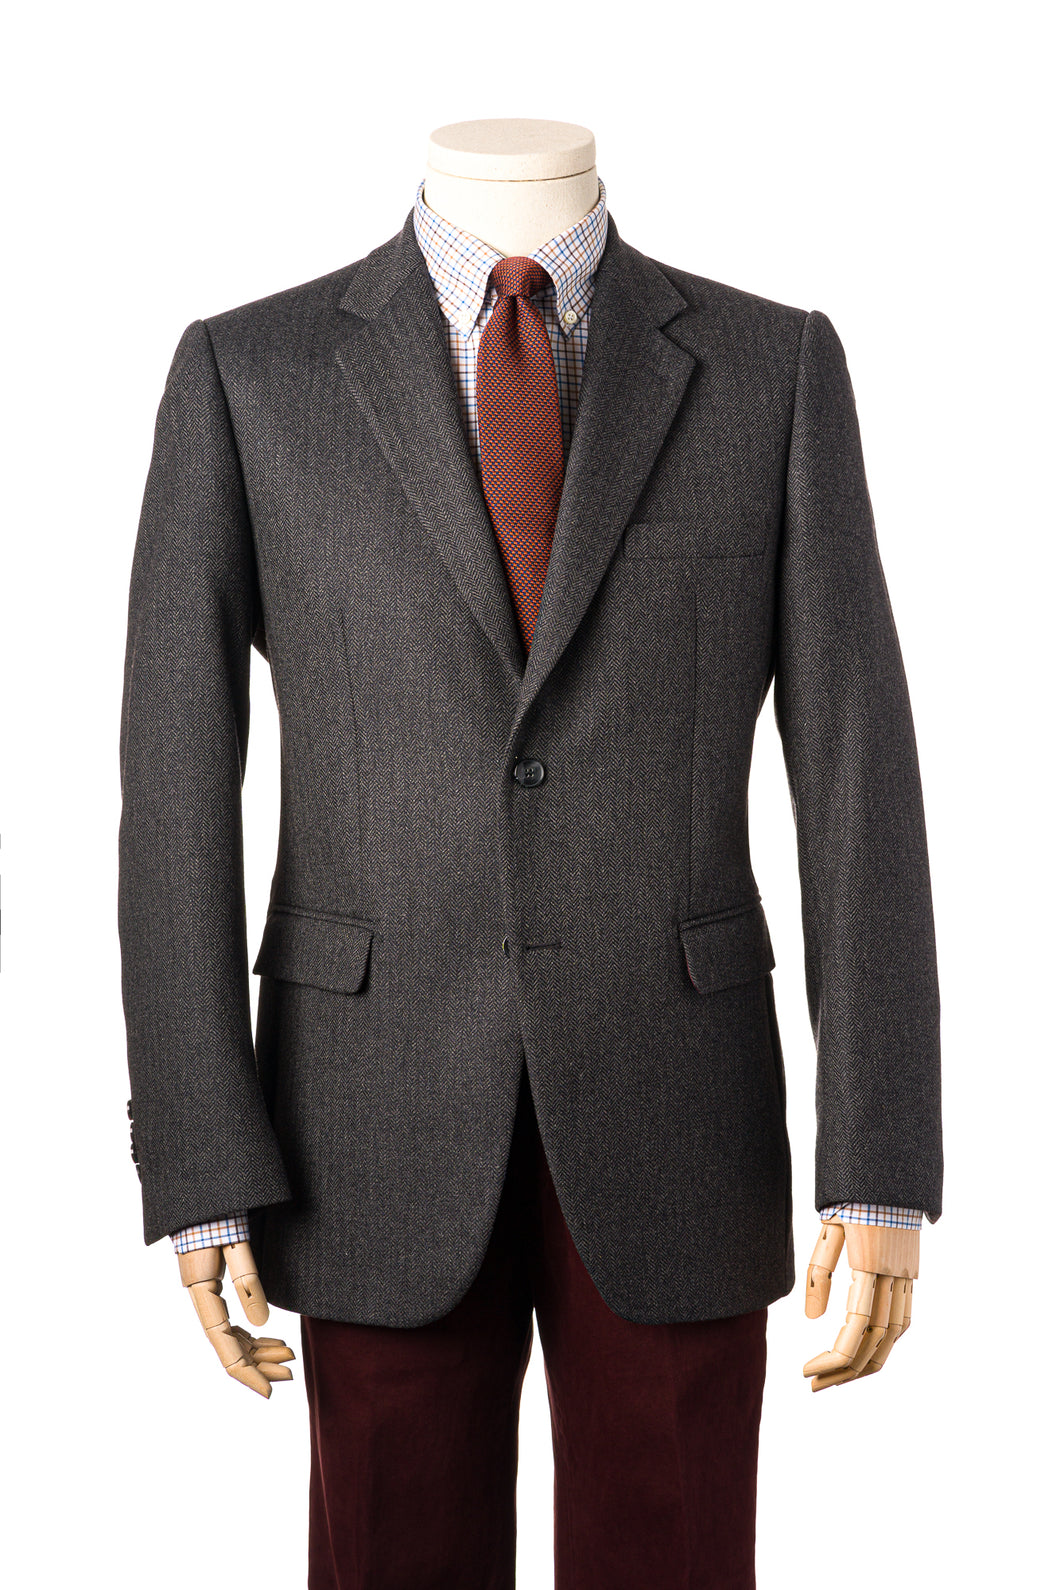 Christakis Rex Grey Herringbone men's Jacket